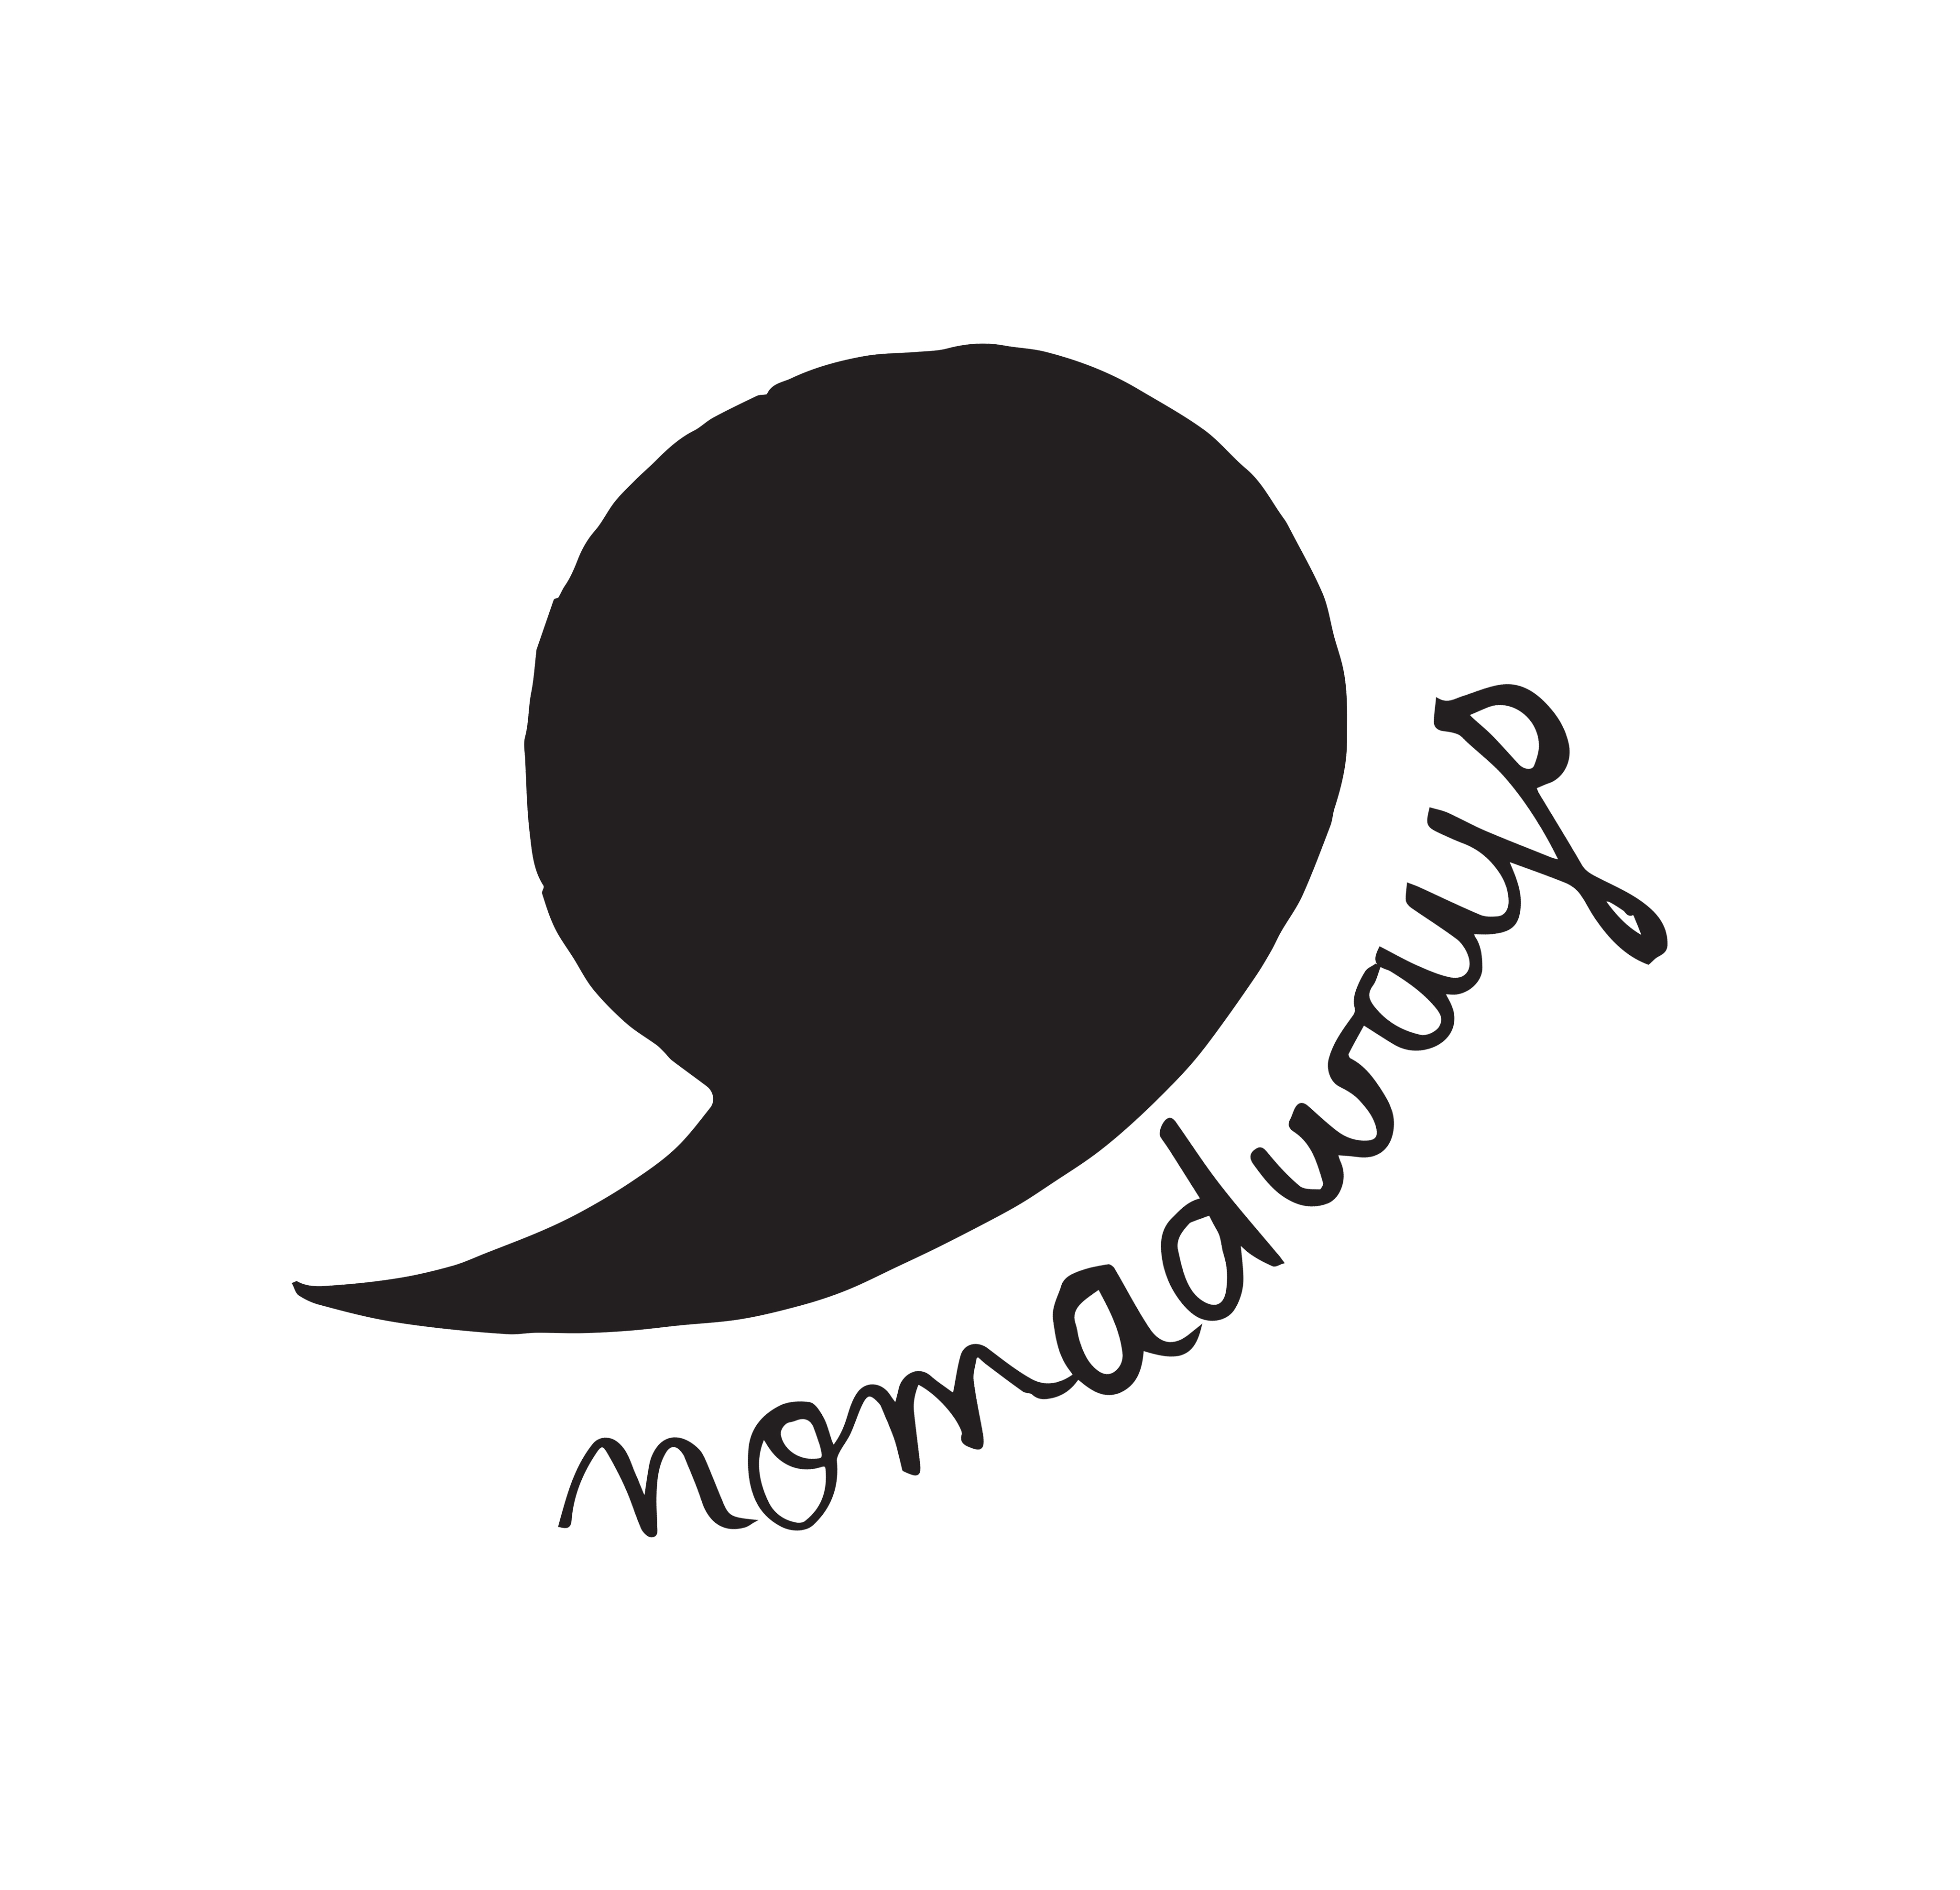 Nomadways logo.jpg